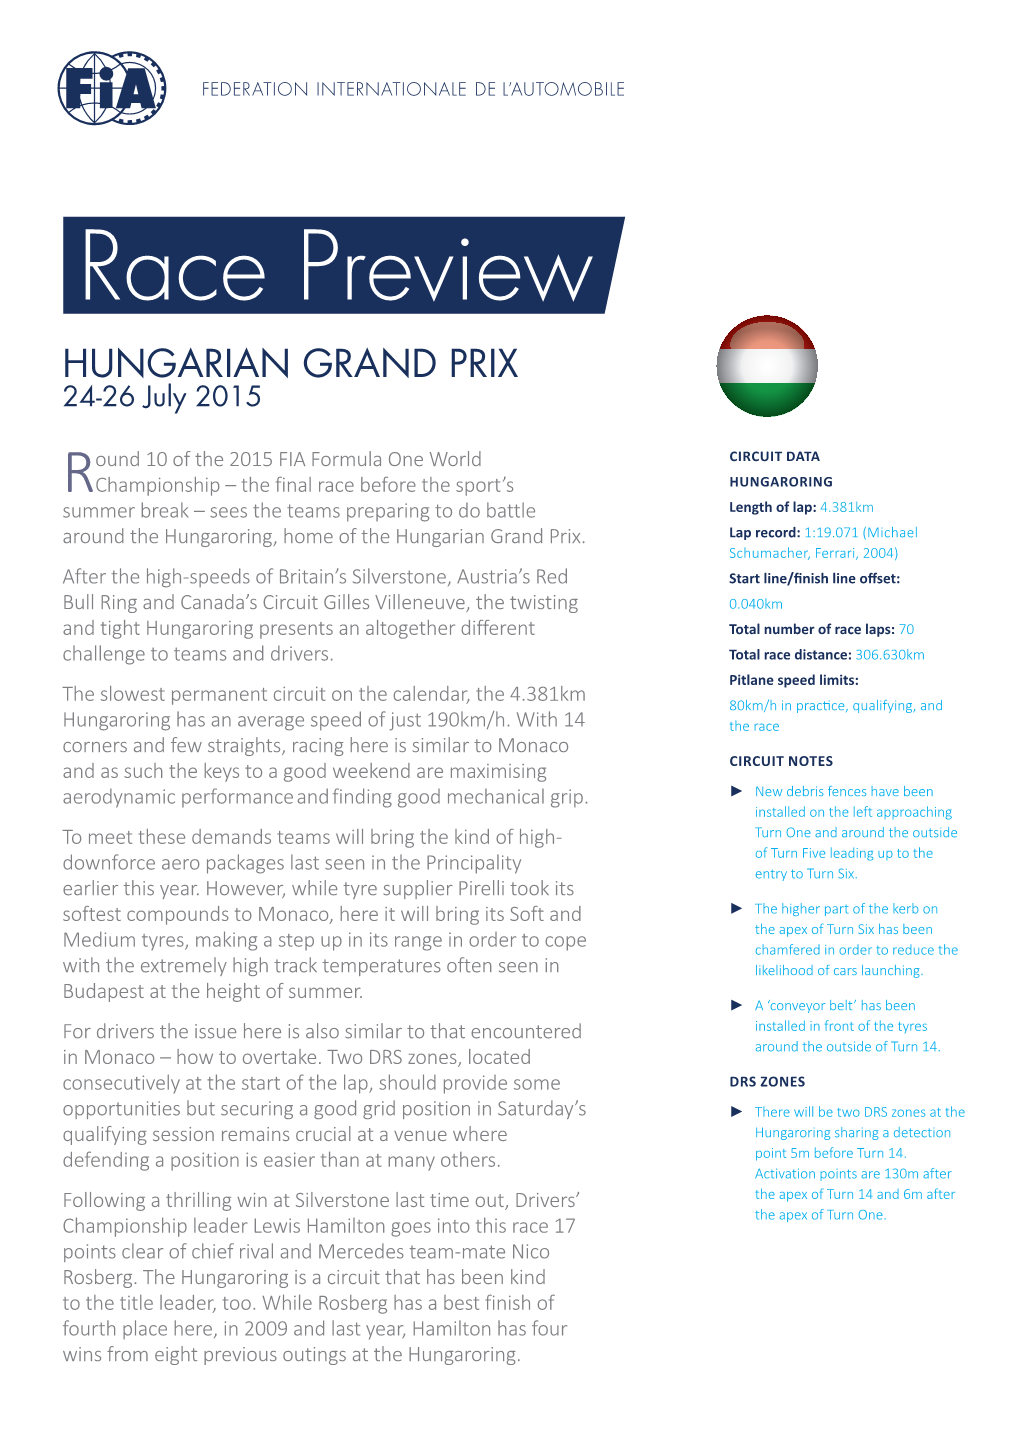 HUNGARIAN GRAND PRIX 24-26 July 2015